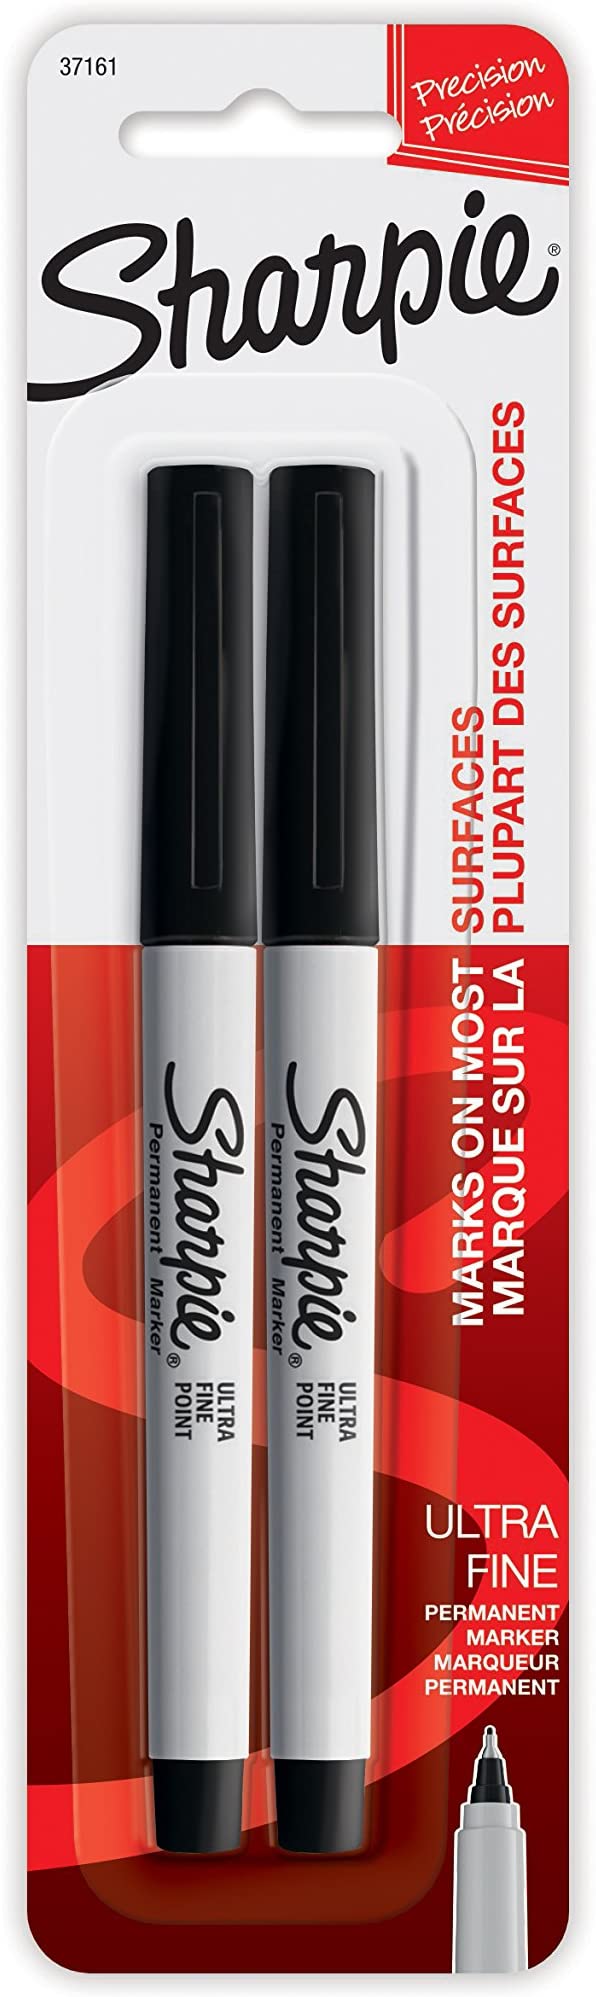 Sharpie Permanent Markers, Ultra Fine Point, Black, 2 Count (37161) –  Ramrock School & Office Supplies